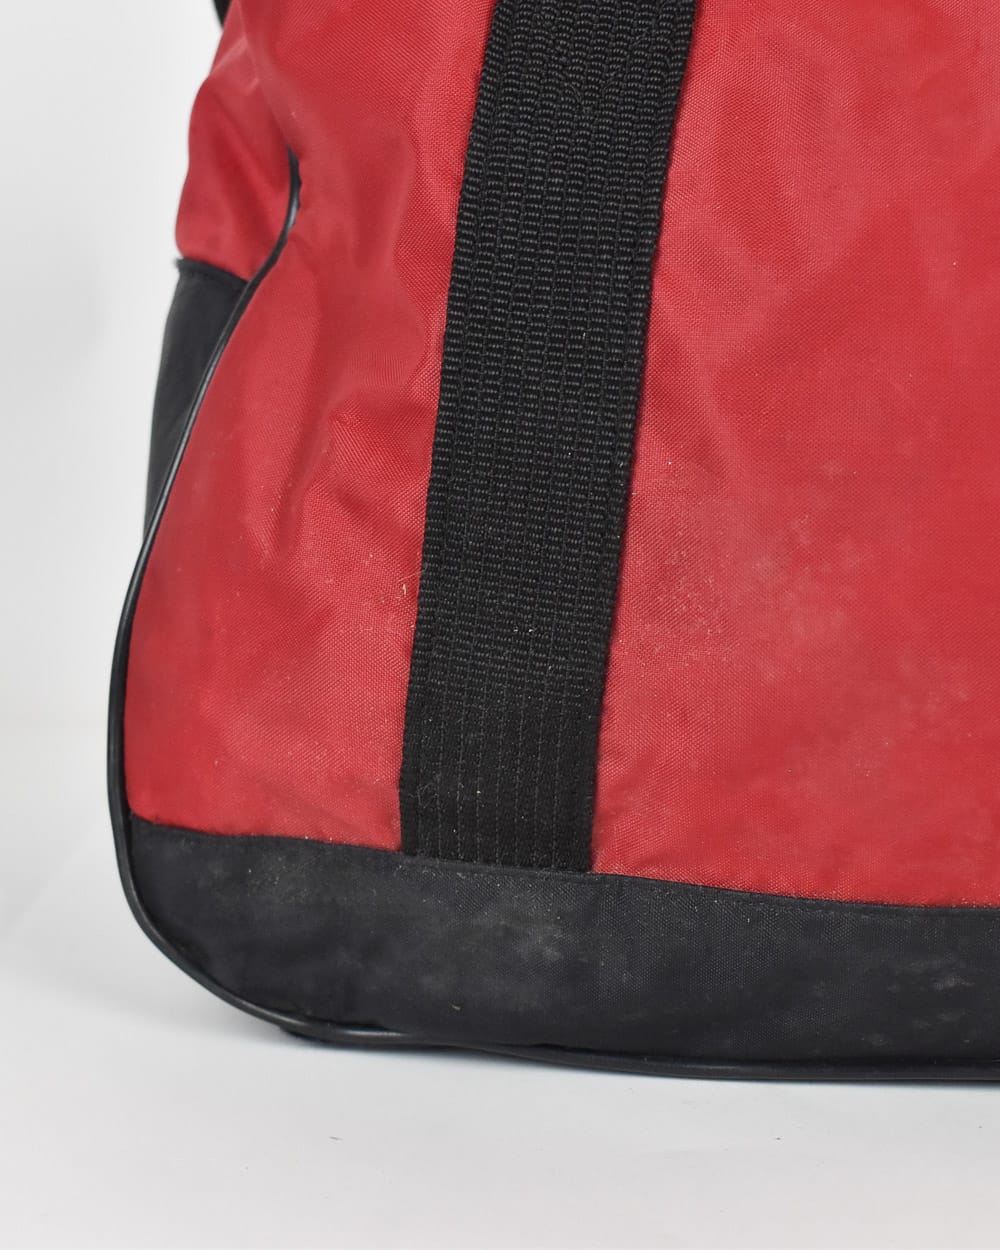  Nike Duffle Bag